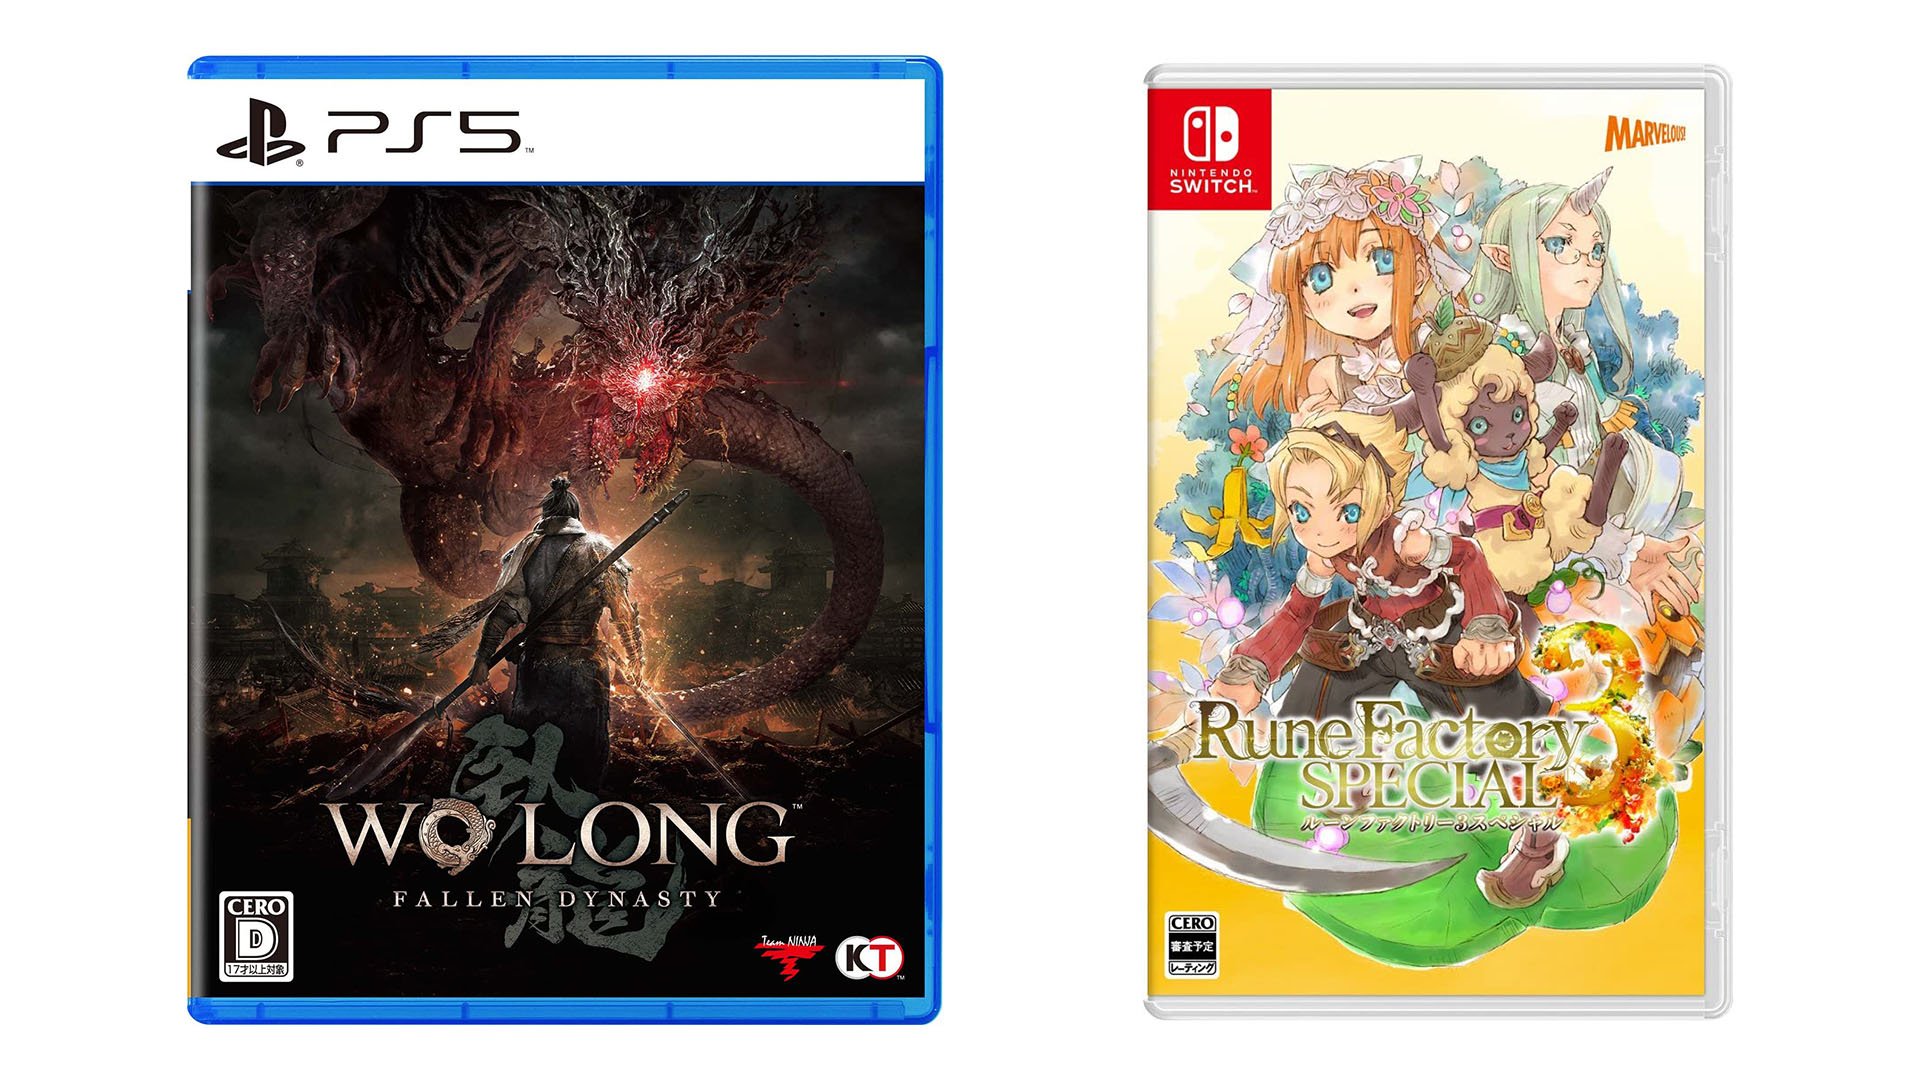 Rilis game Jepang minggu ini: Wo Long: Fallen Dynasty, Rune Factory 3 Special, dan banyak lagi